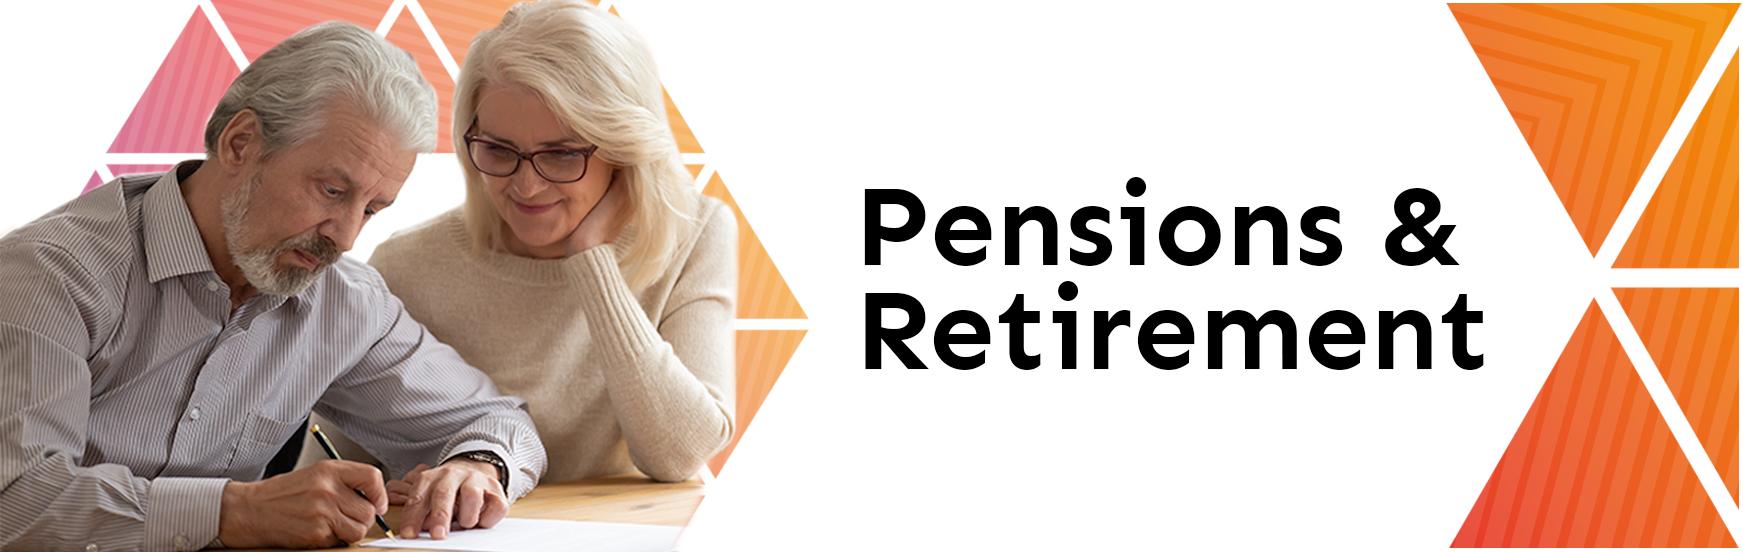 Pensions Retirement